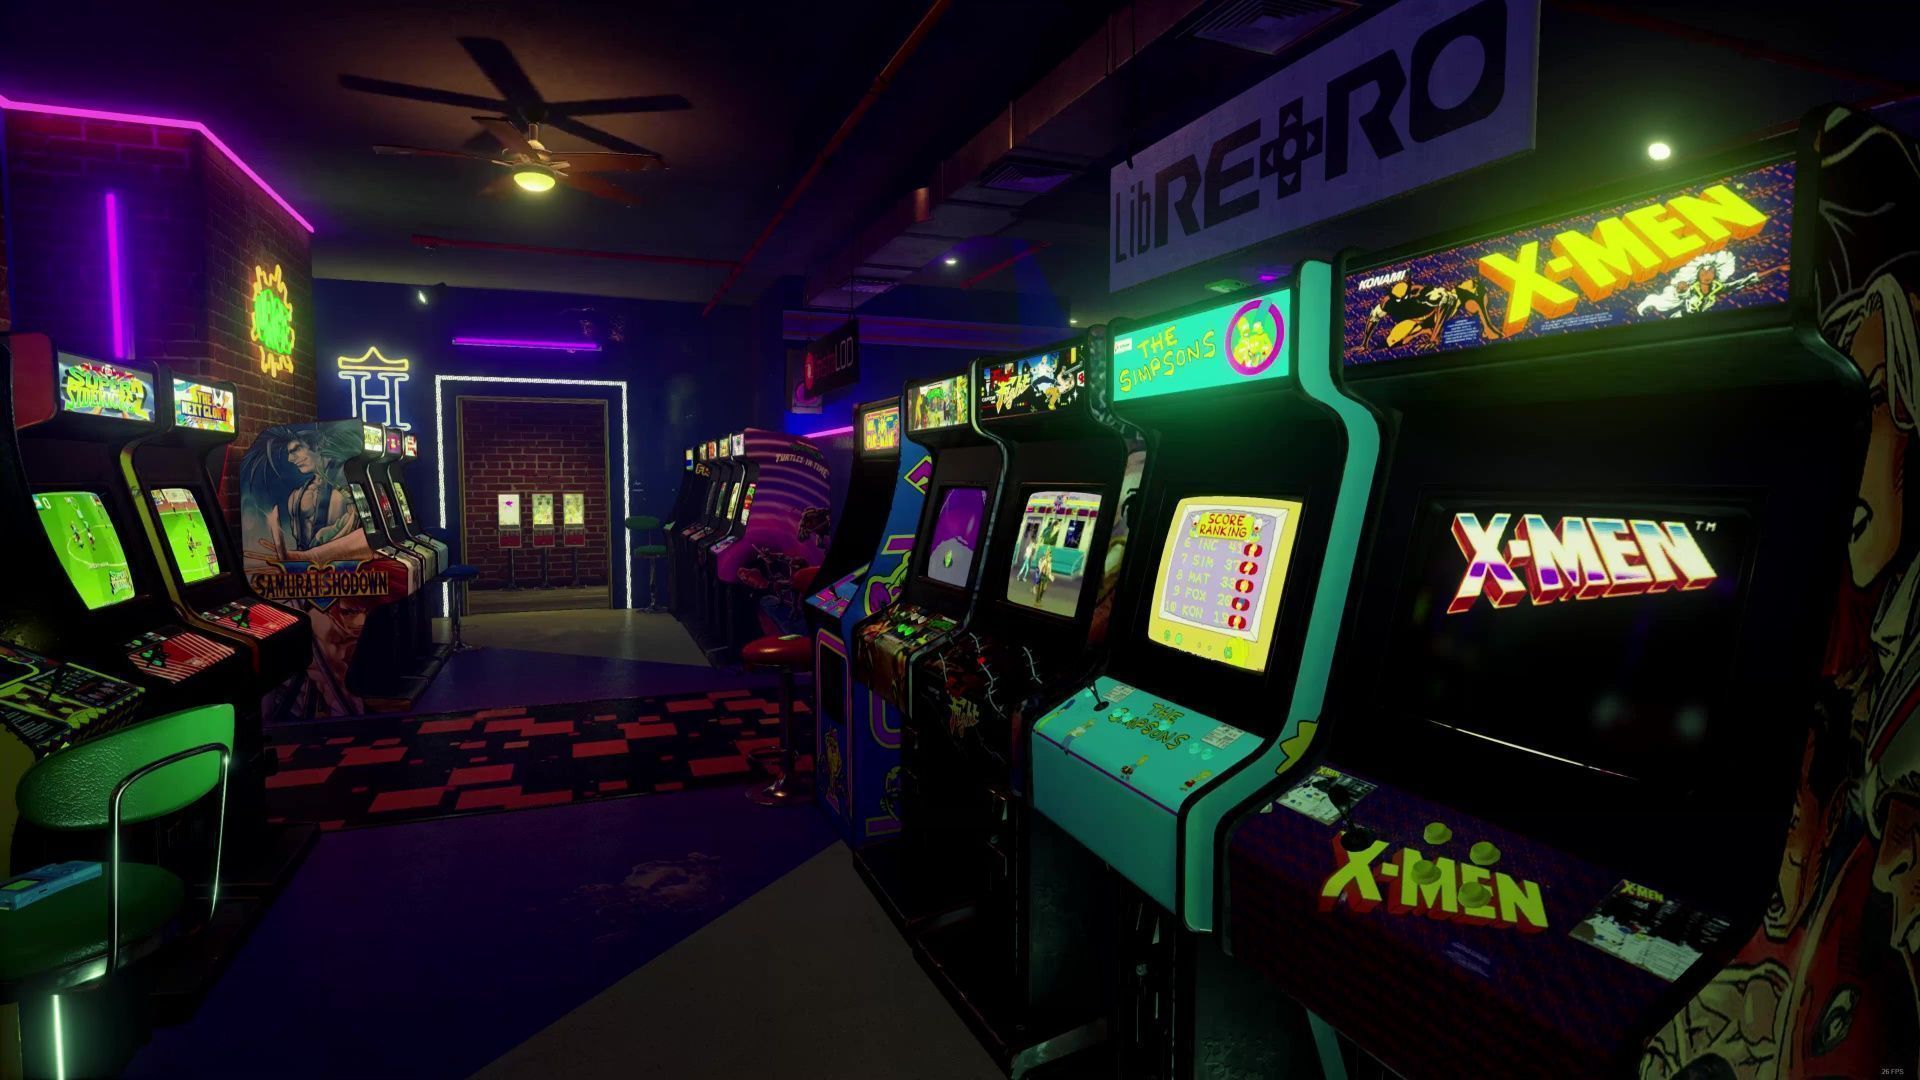 A room full of old school arcade games - Arcade